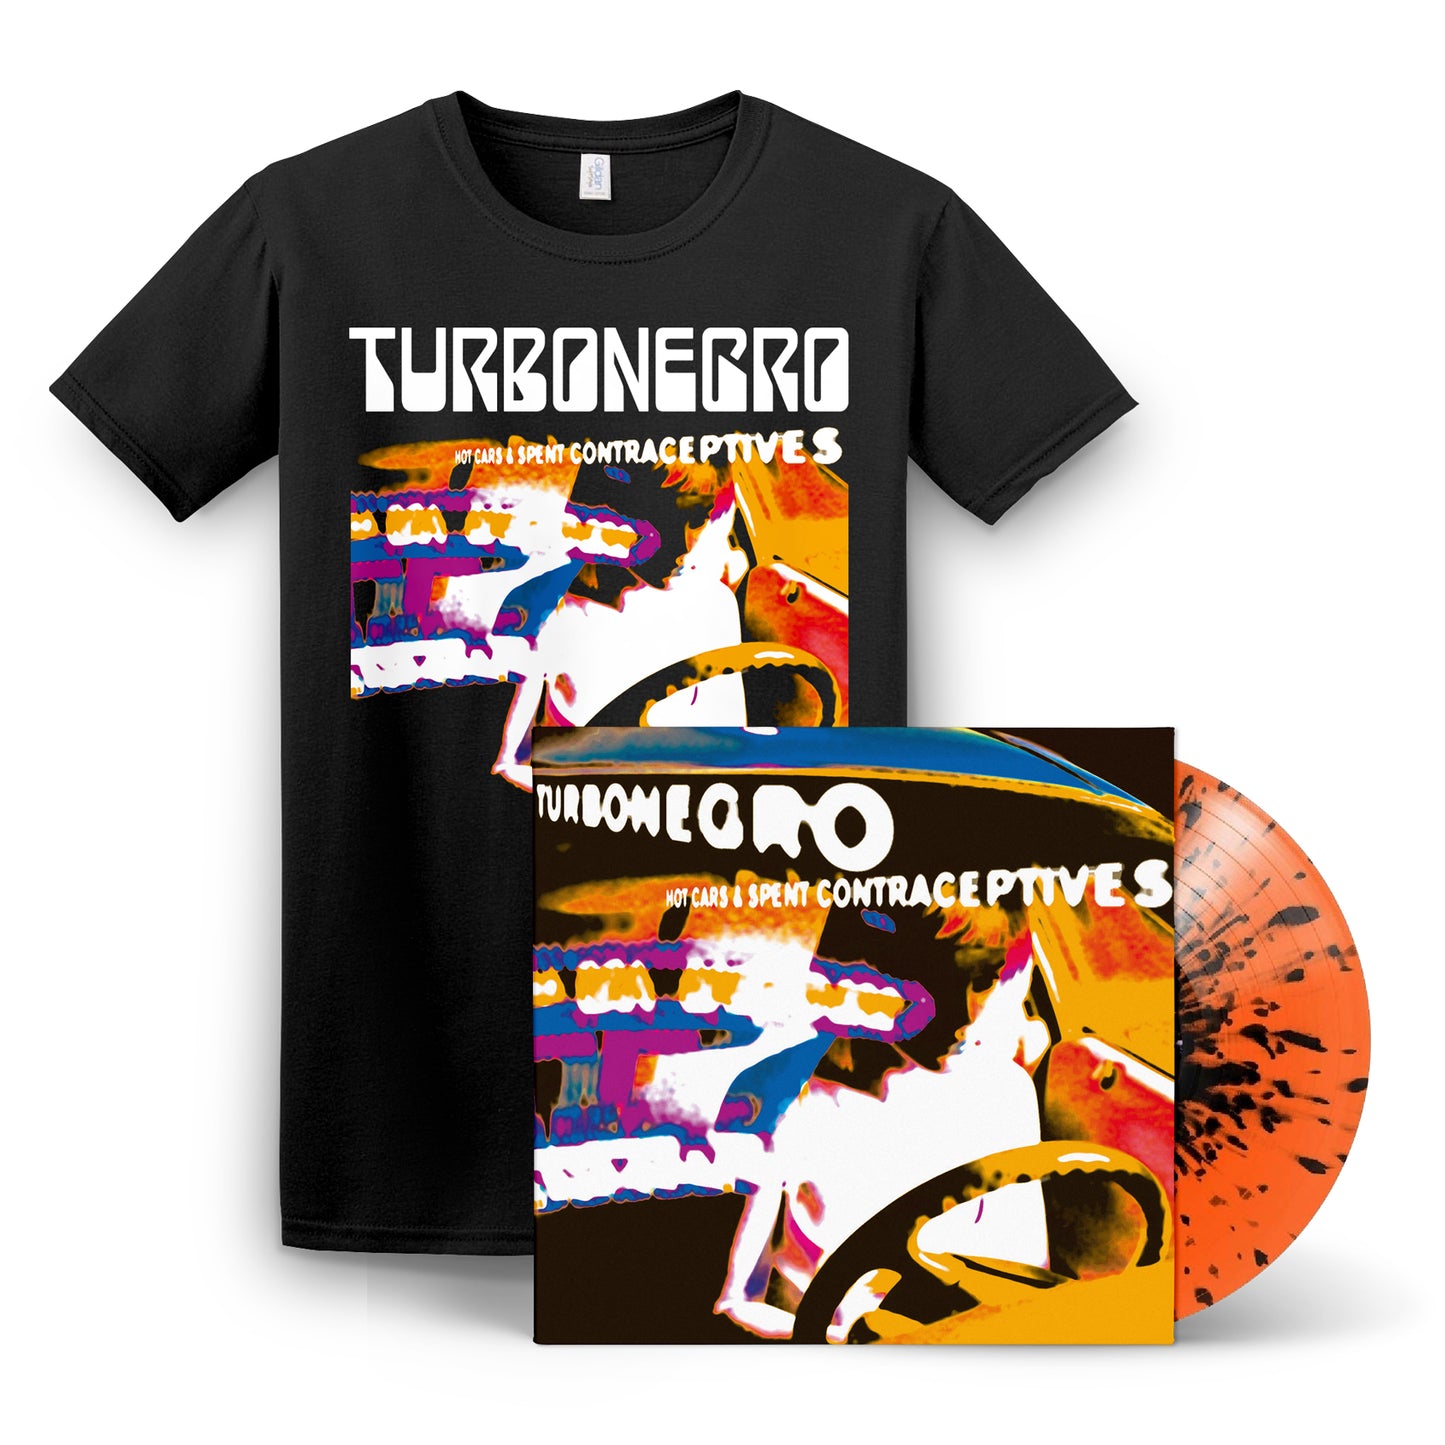 TURBONEGRO - Hot Cars & Spent Contraceptives (LP Orange Vinyl With Black Splatter + T-shirt Bundle)